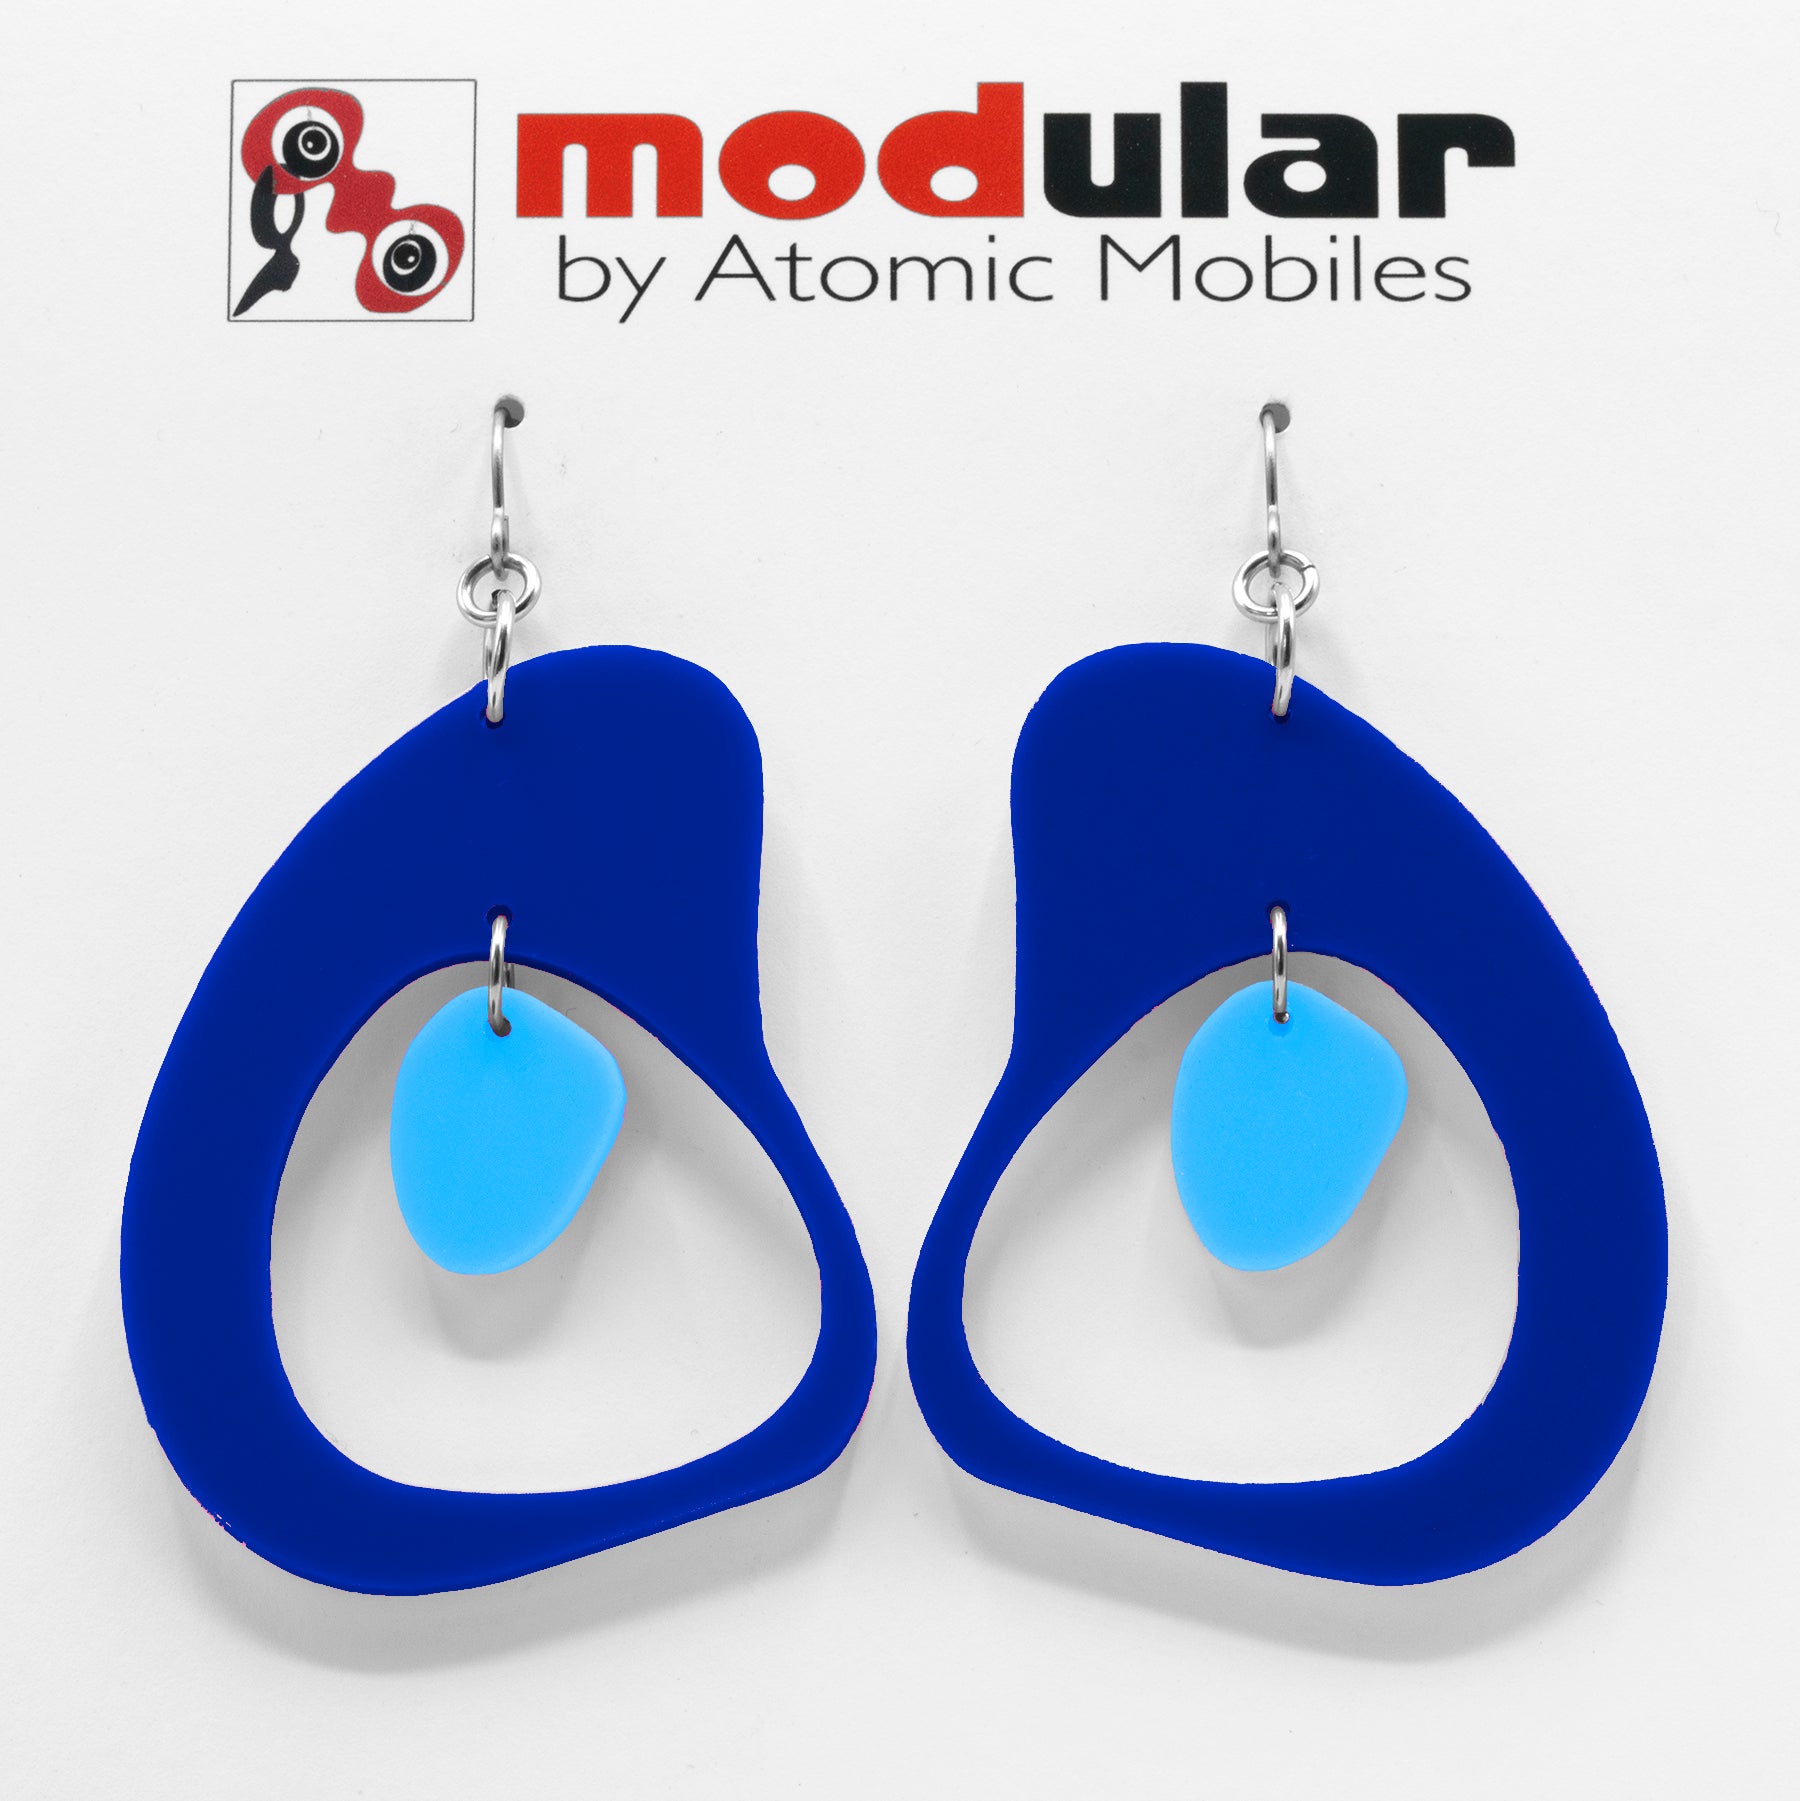 MODular Earrings - Boomerang Statement Navy Blue in Atomic by AtomicMobiles.com - retro era inspired mod handmade jewelry